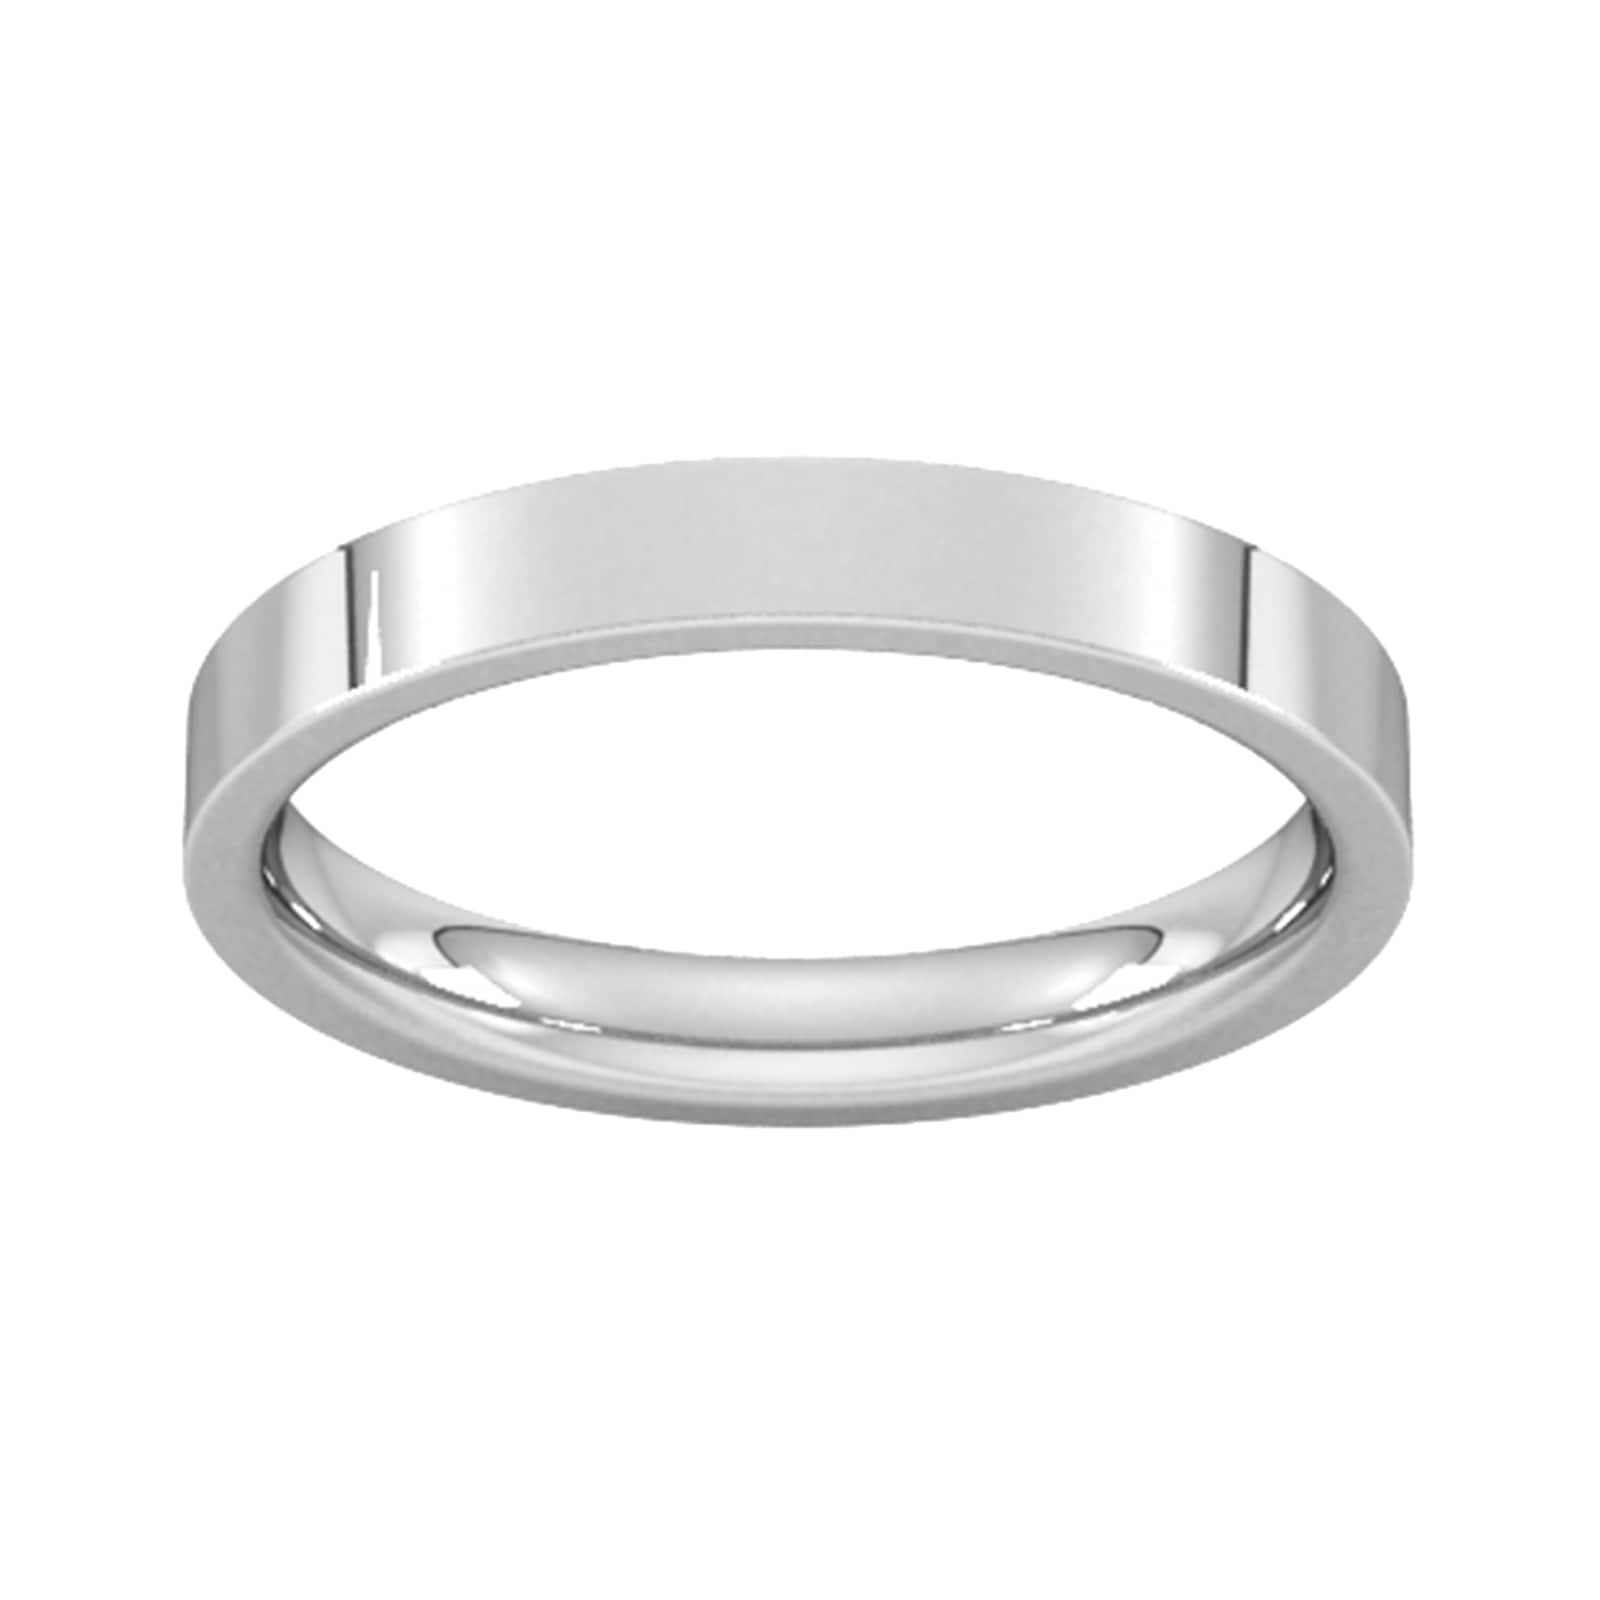 3mm Flat Court Heavy Wedding Ring In Platinum - Ring Size Q